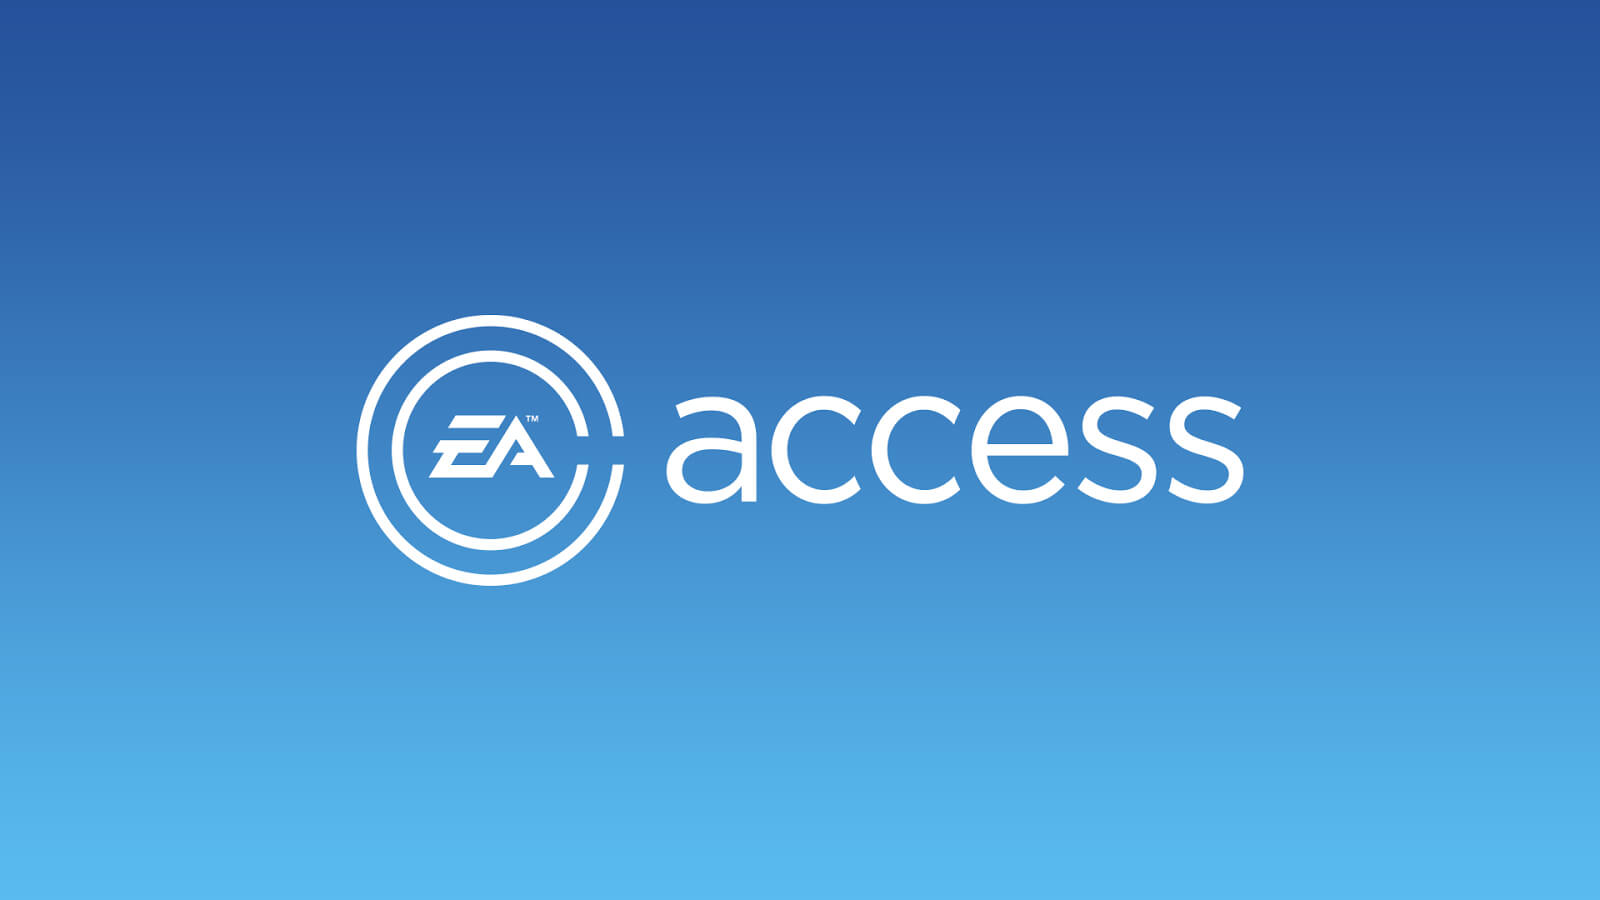 EA Access подписка для PS4 появится в Июле (фото)